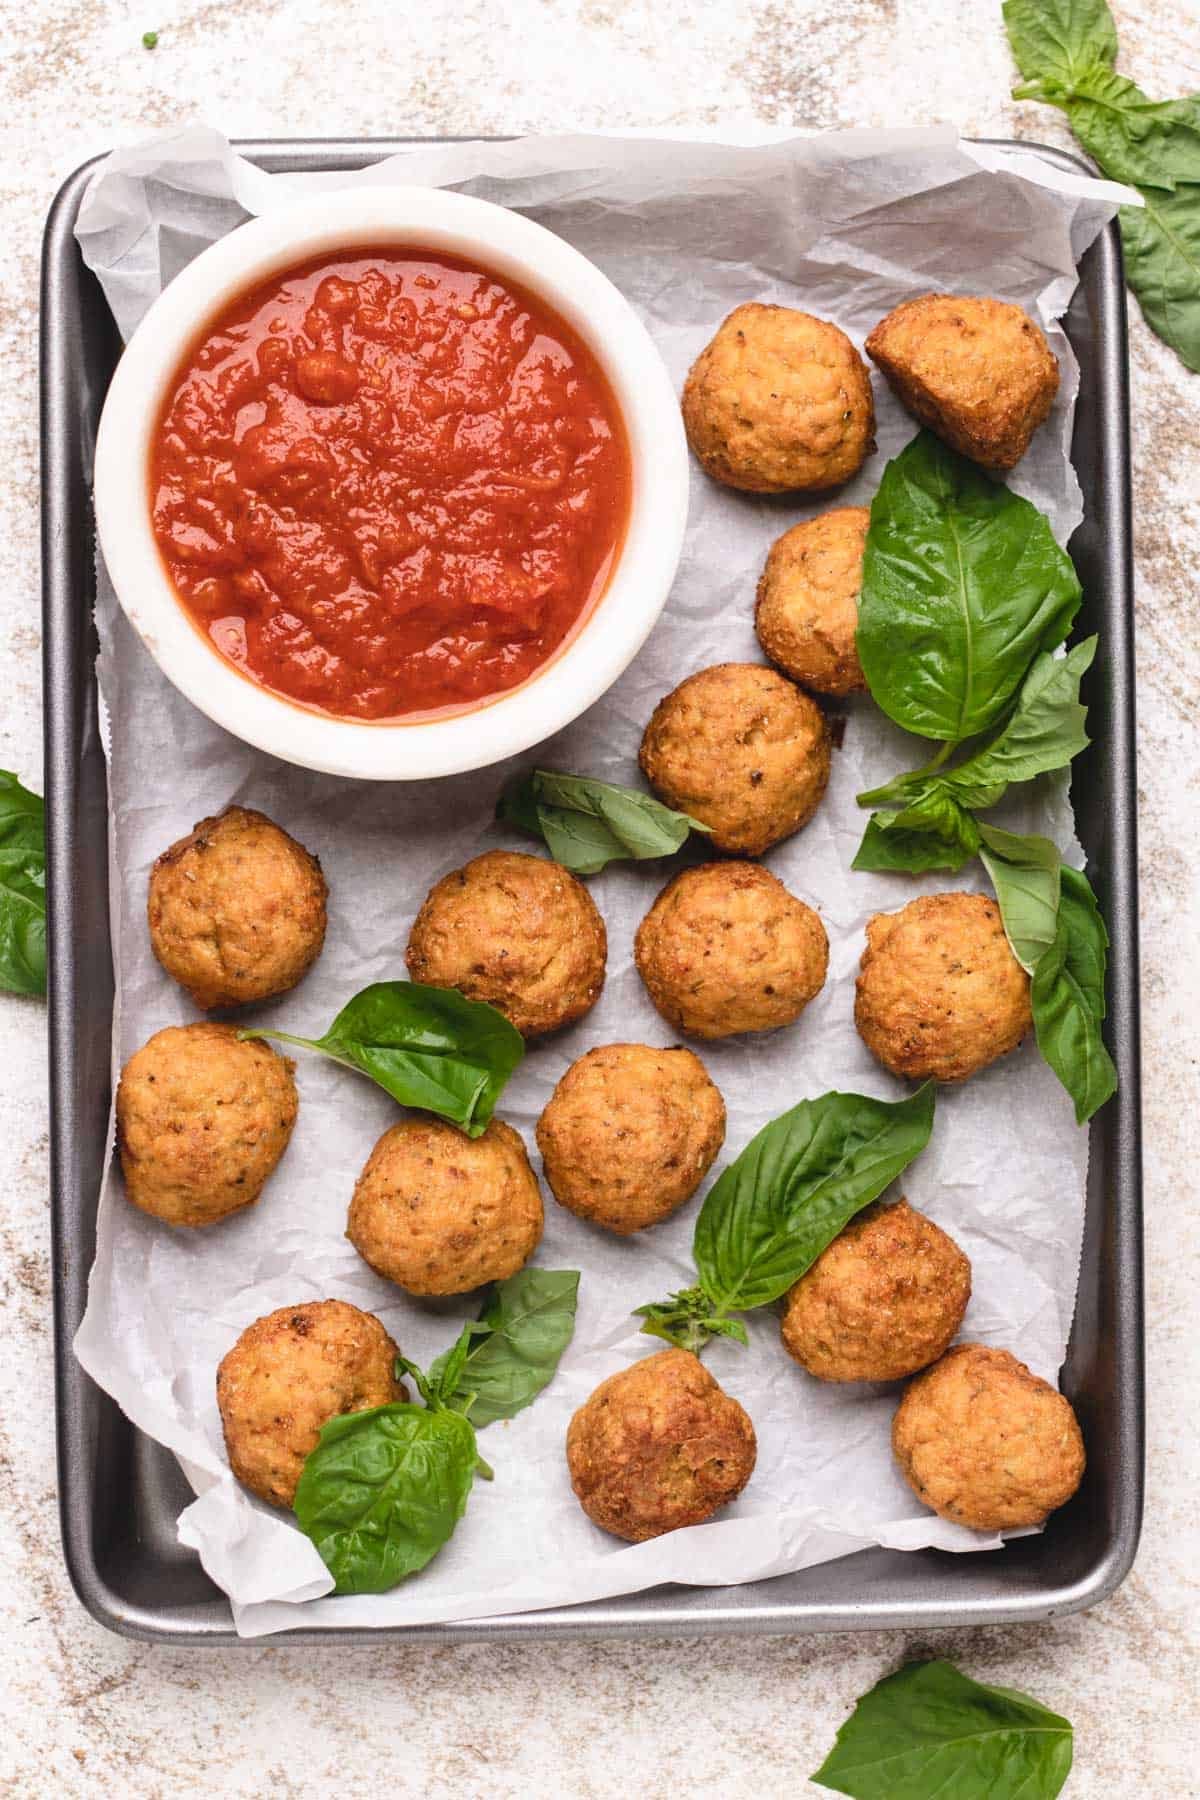 Meatballs on a baking tray with marinara sauce.